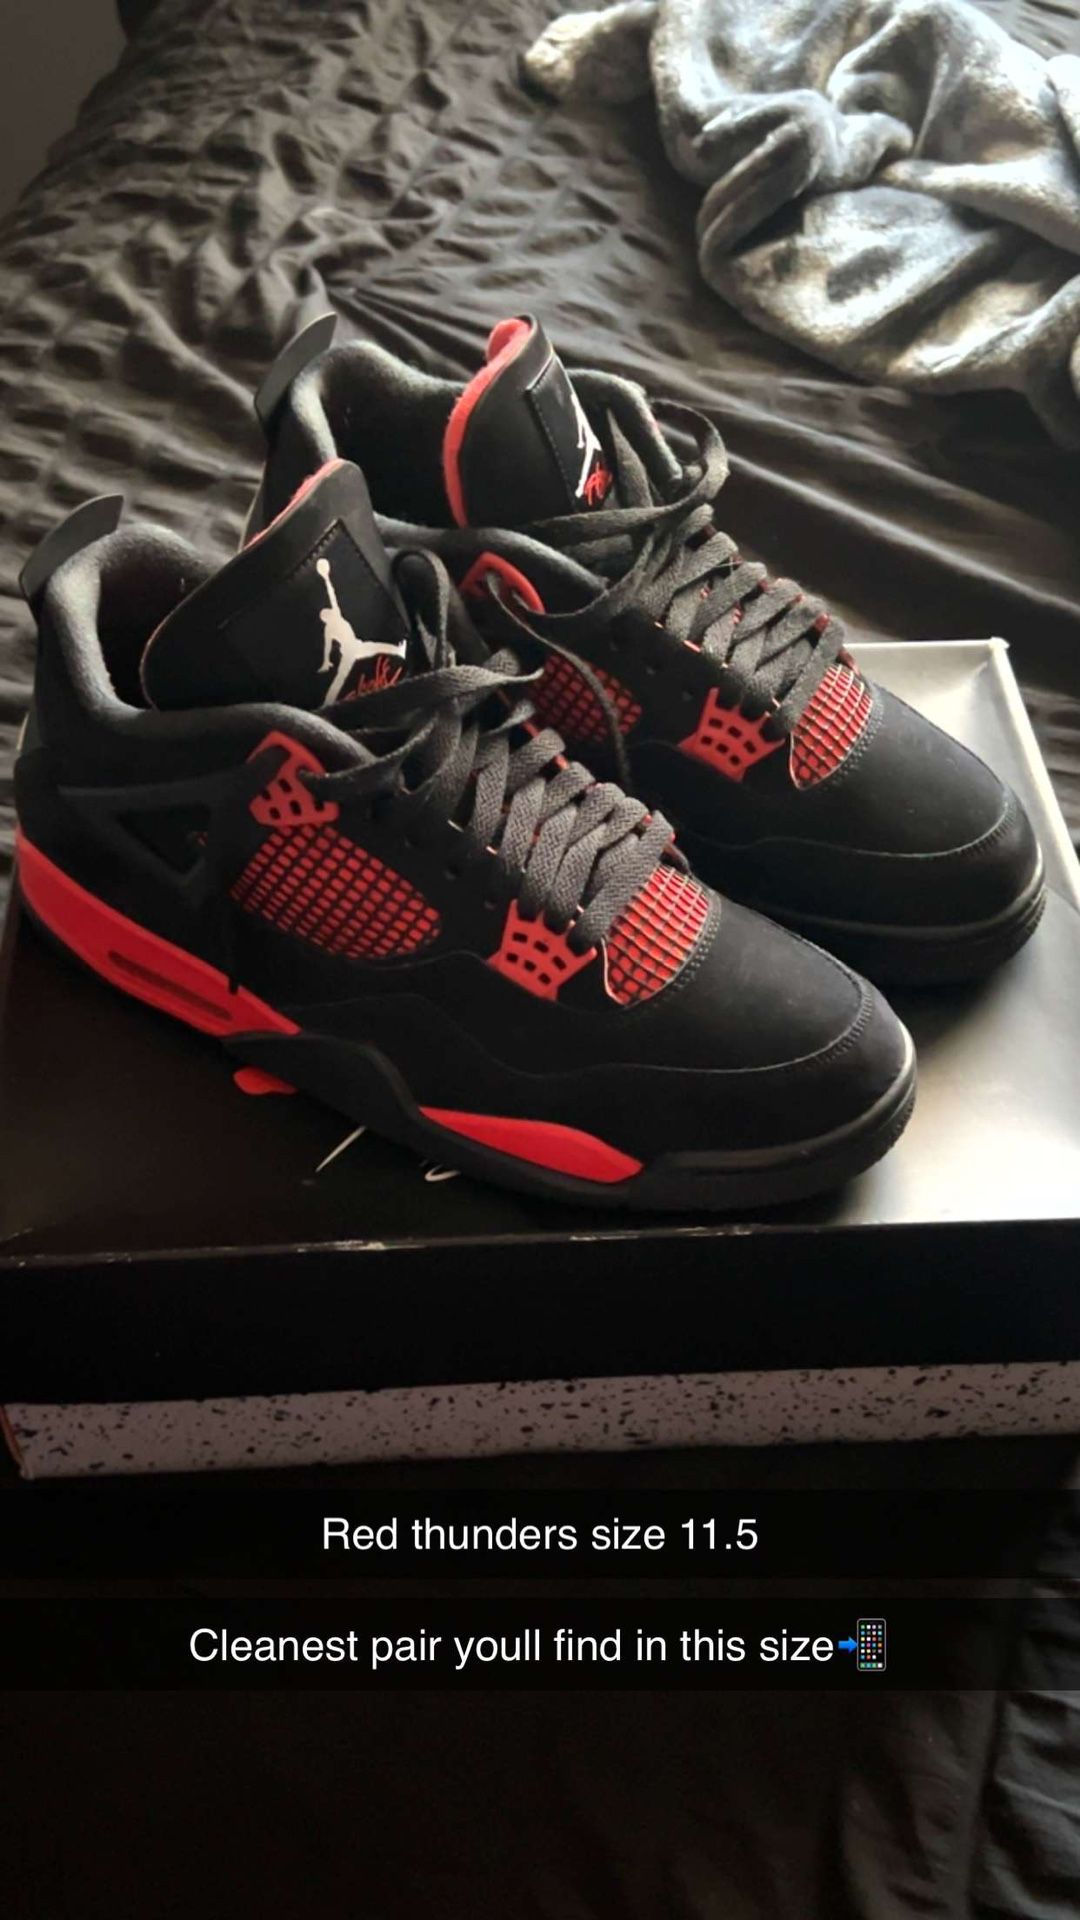 Jordan 4 Red thunders Size 11.5 